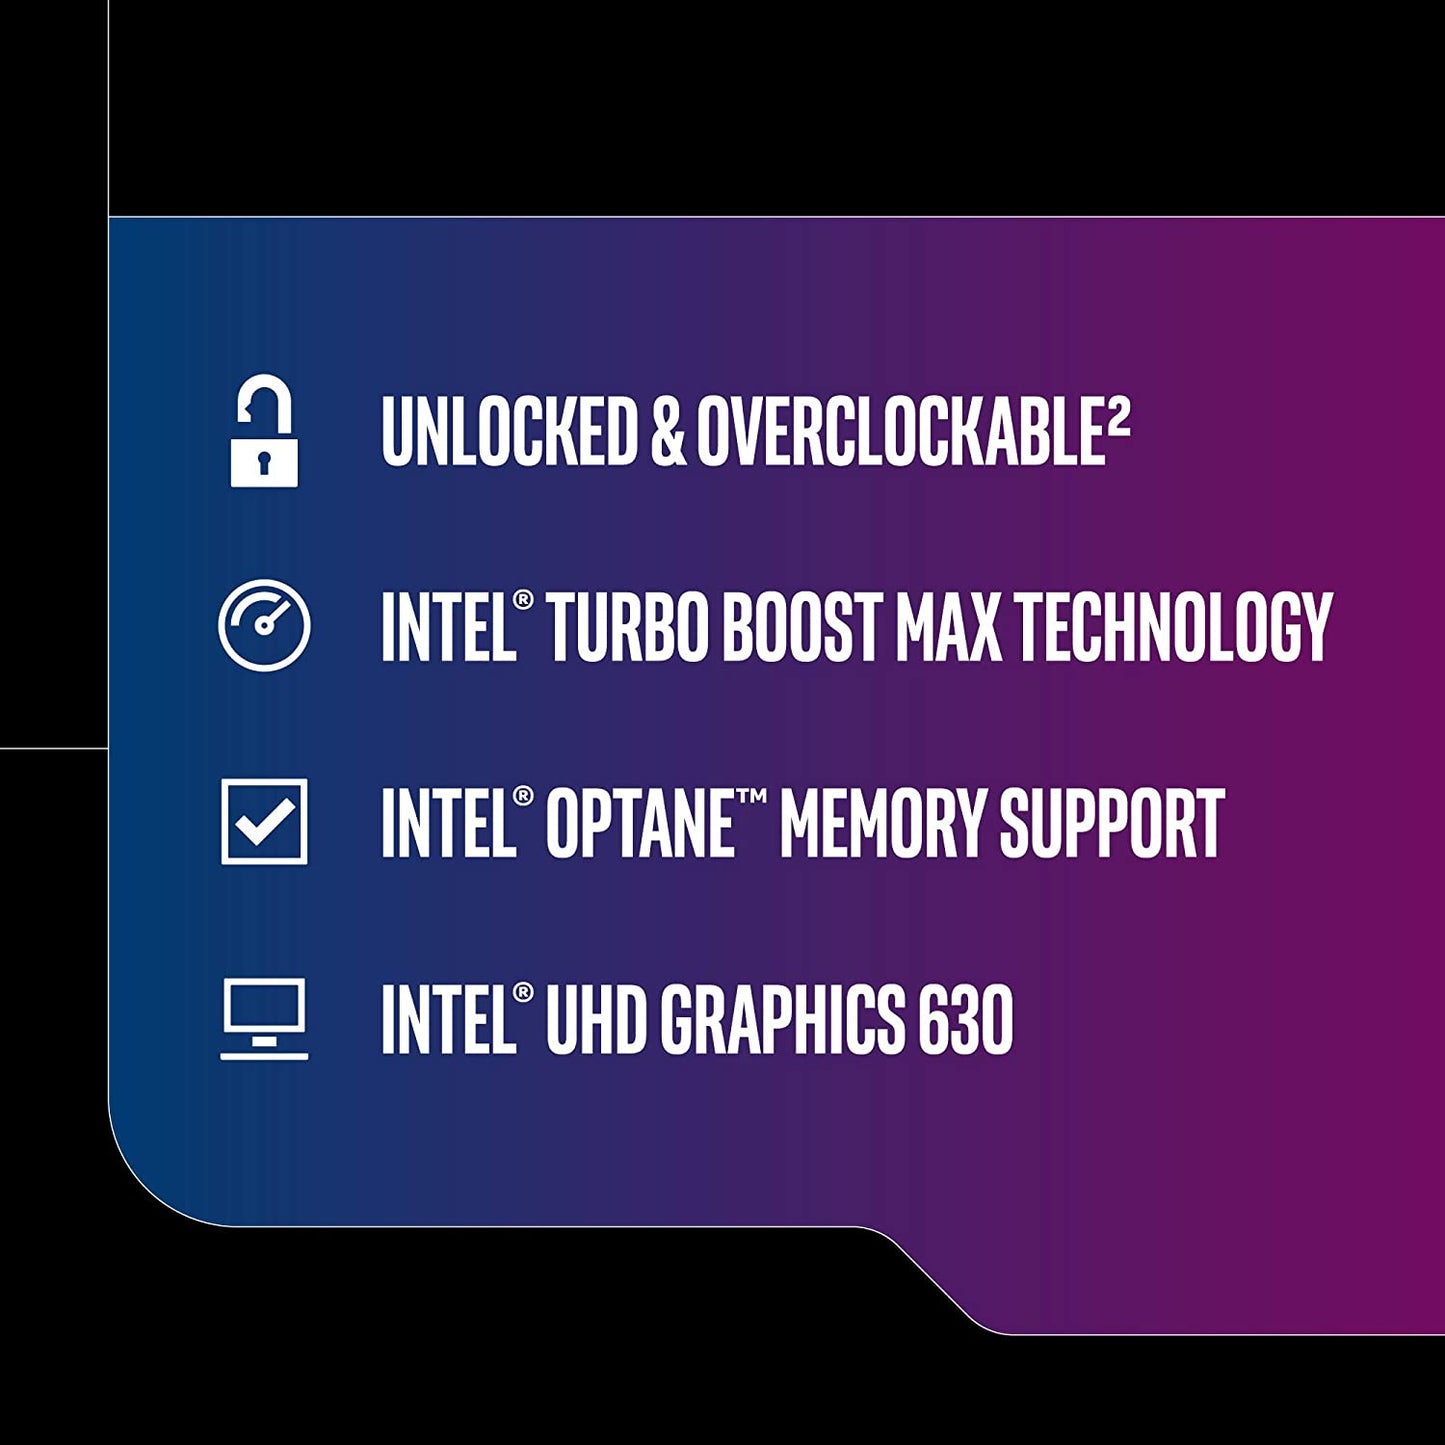 Intel Core 9th Gen i9-9900K LGA1151 Unlocked Desktop Processor 8 Cores up to 5GHz 16MB Cache